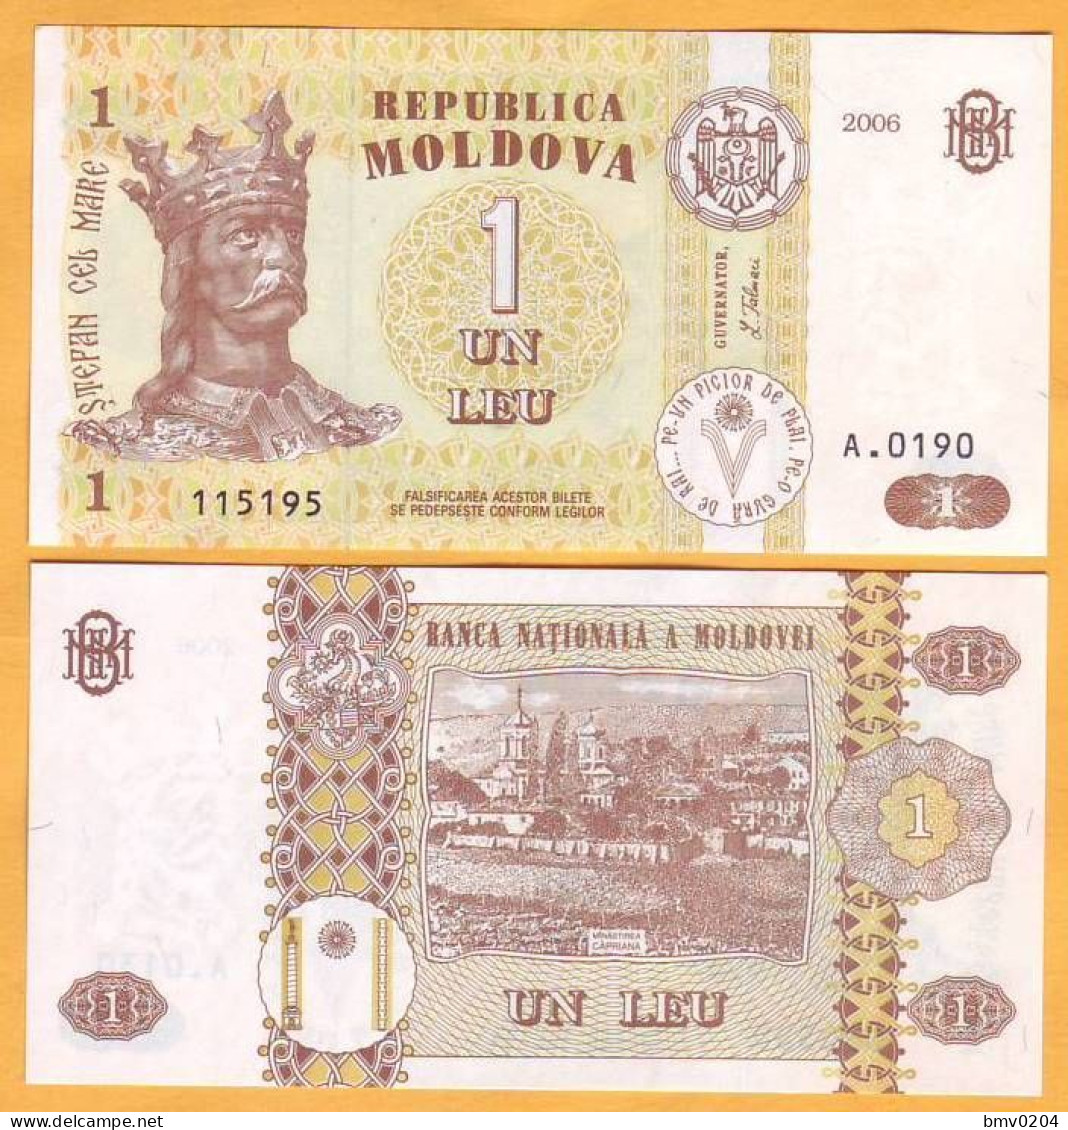 Moldova Moldavie  5 Banknotes  "1 LEI  2006", UNC  One Set Of 5 1 Leu Banknotes. - Moldavia